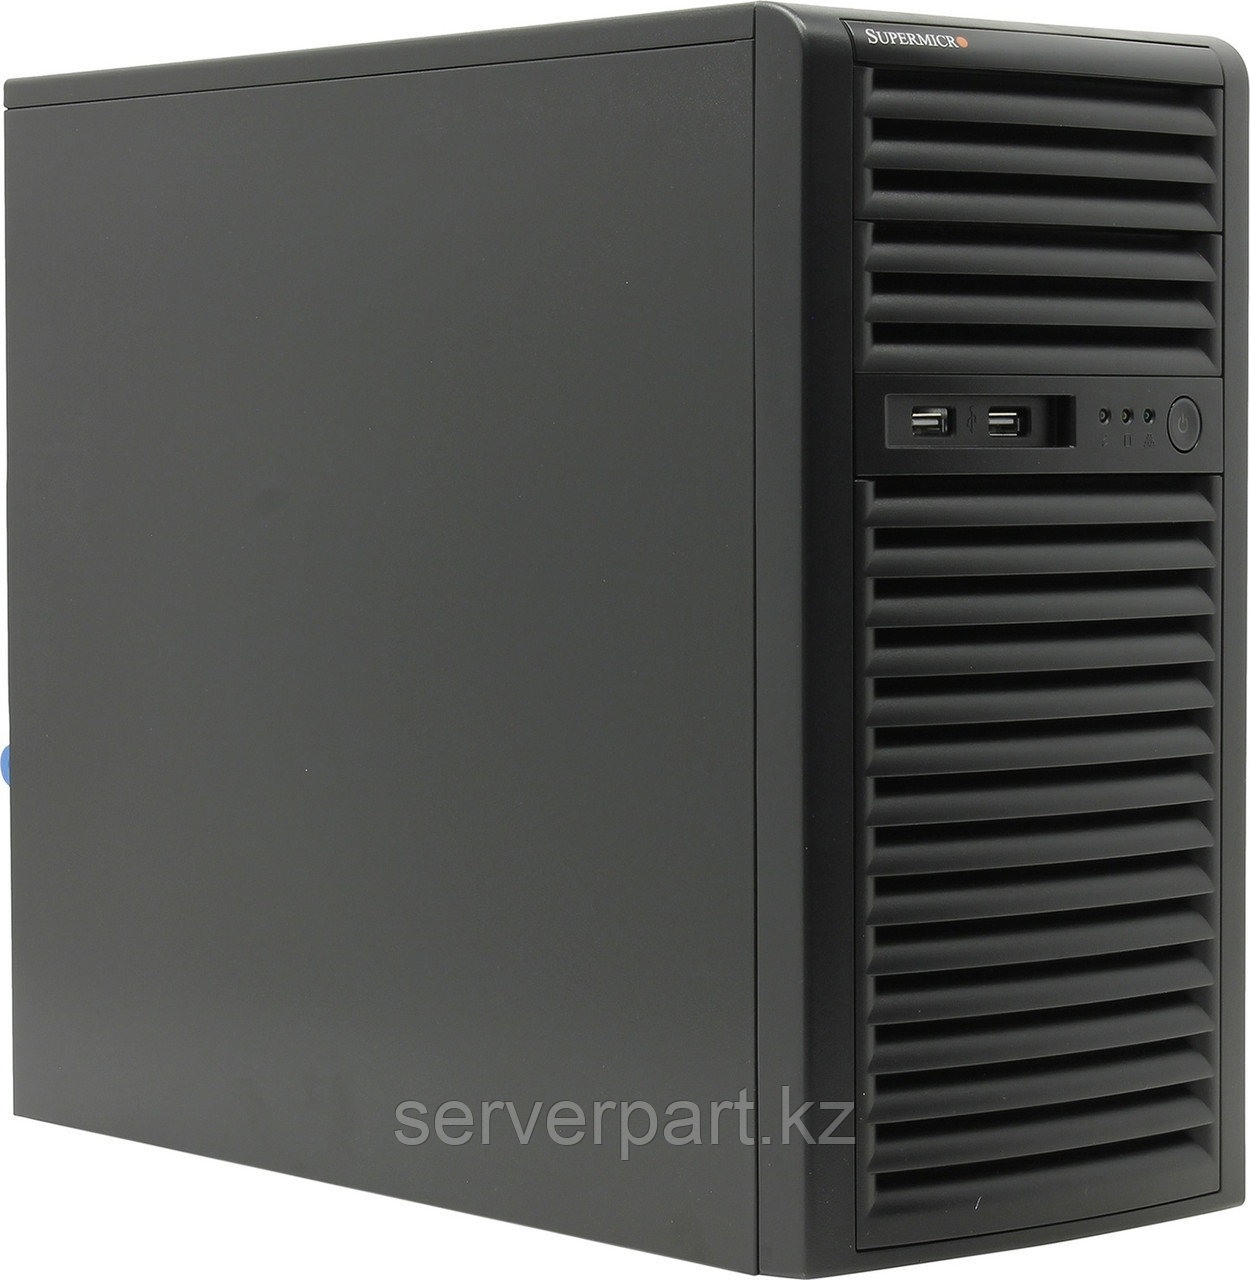 Сервер Supermicro 5039D Tower/4-core intel xeon E3-1220v6 3GHz/32GB UDIMM nECC/1x480GB SSD MU Hyb